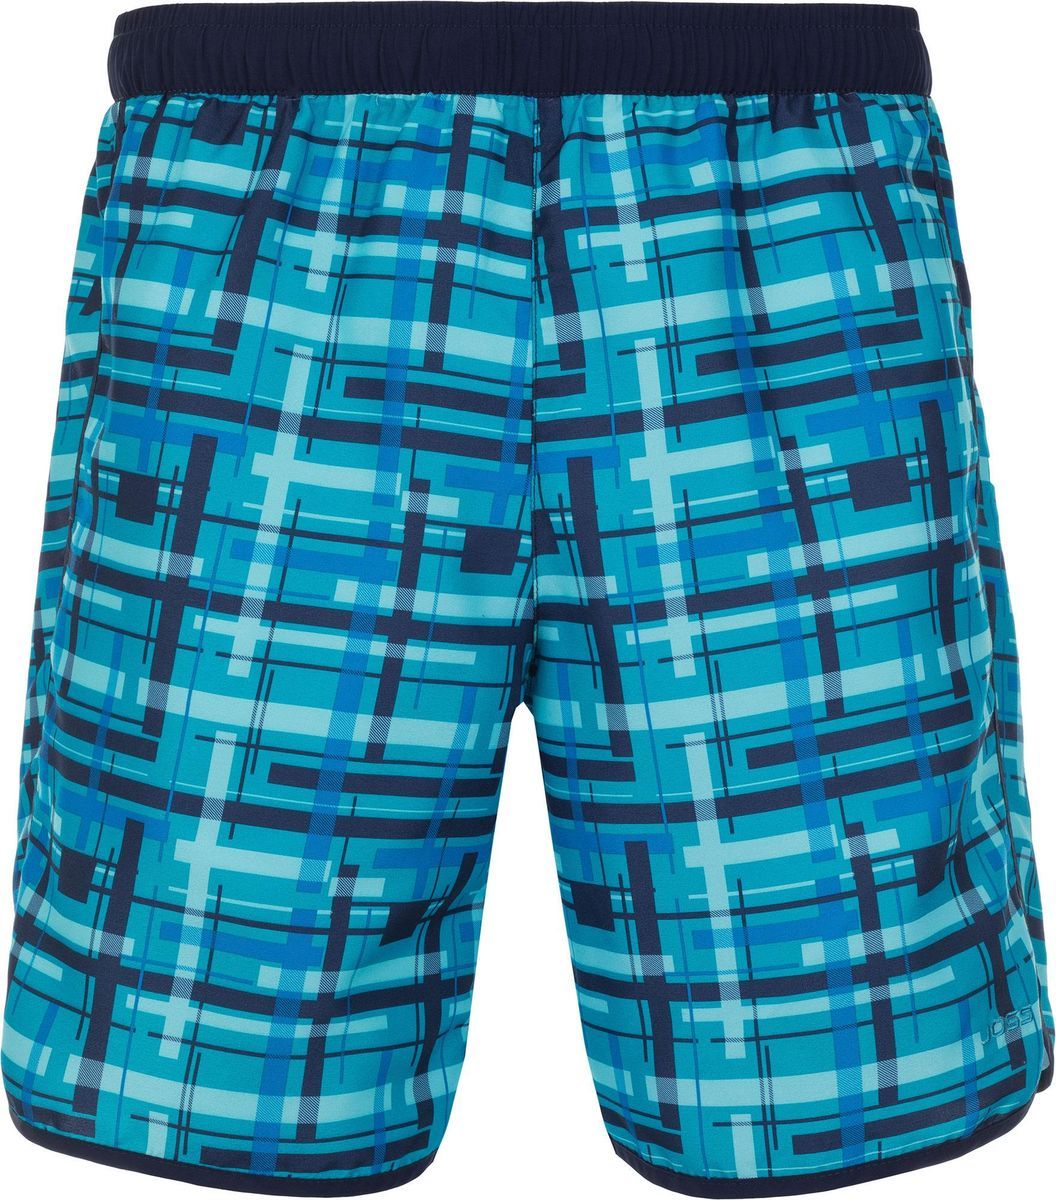   Joss Men's Shorts, . S17AJSSHM02-MU.  48